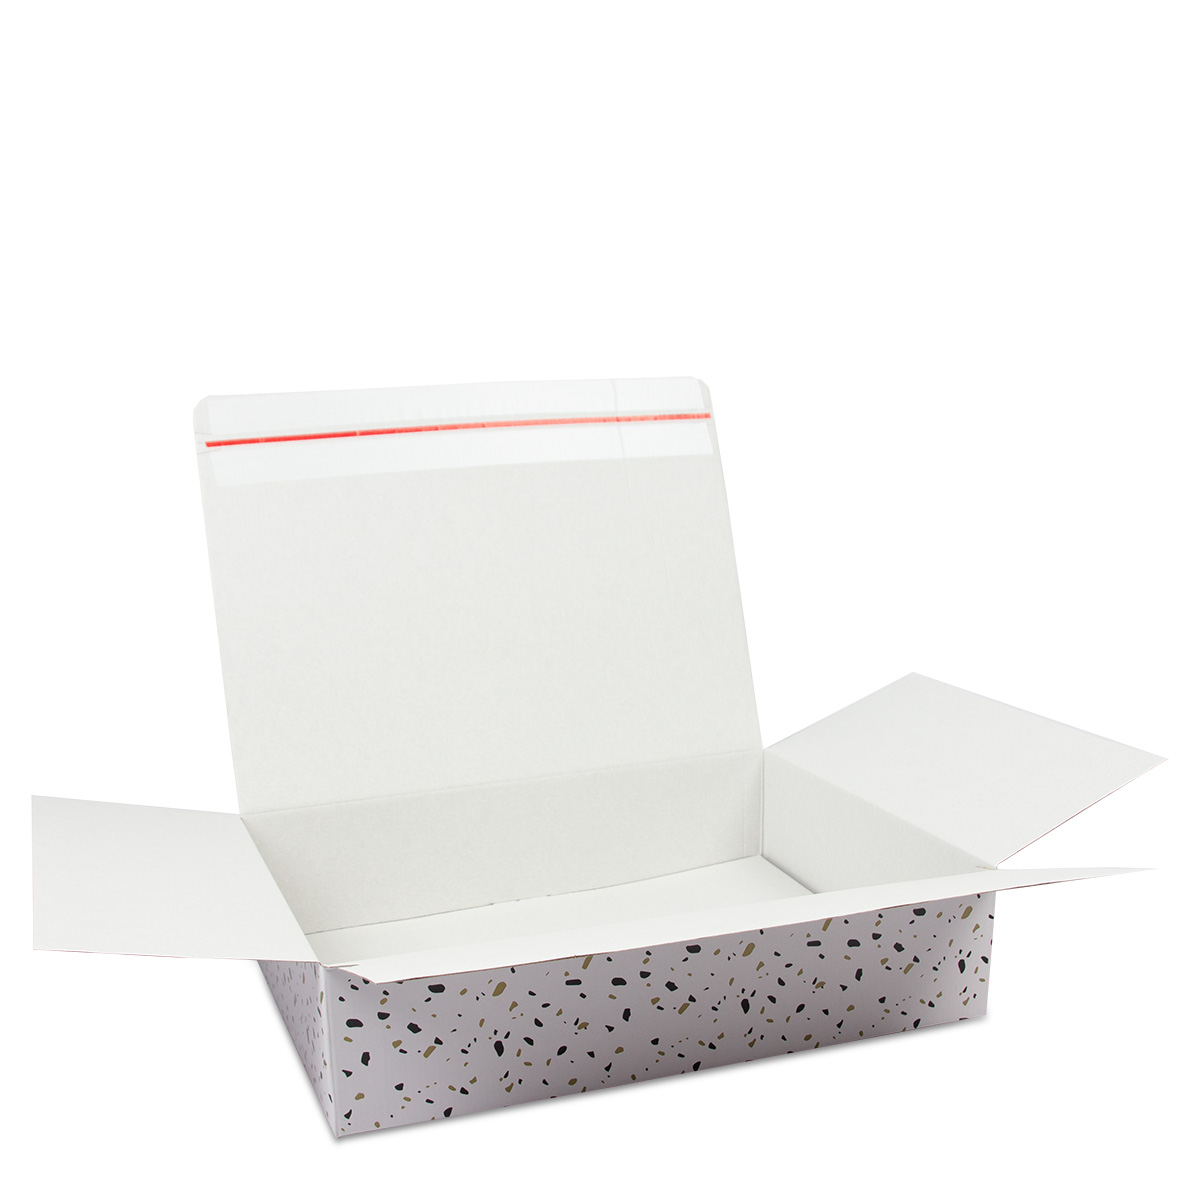 Confetti borrel boxen met plakstrip 